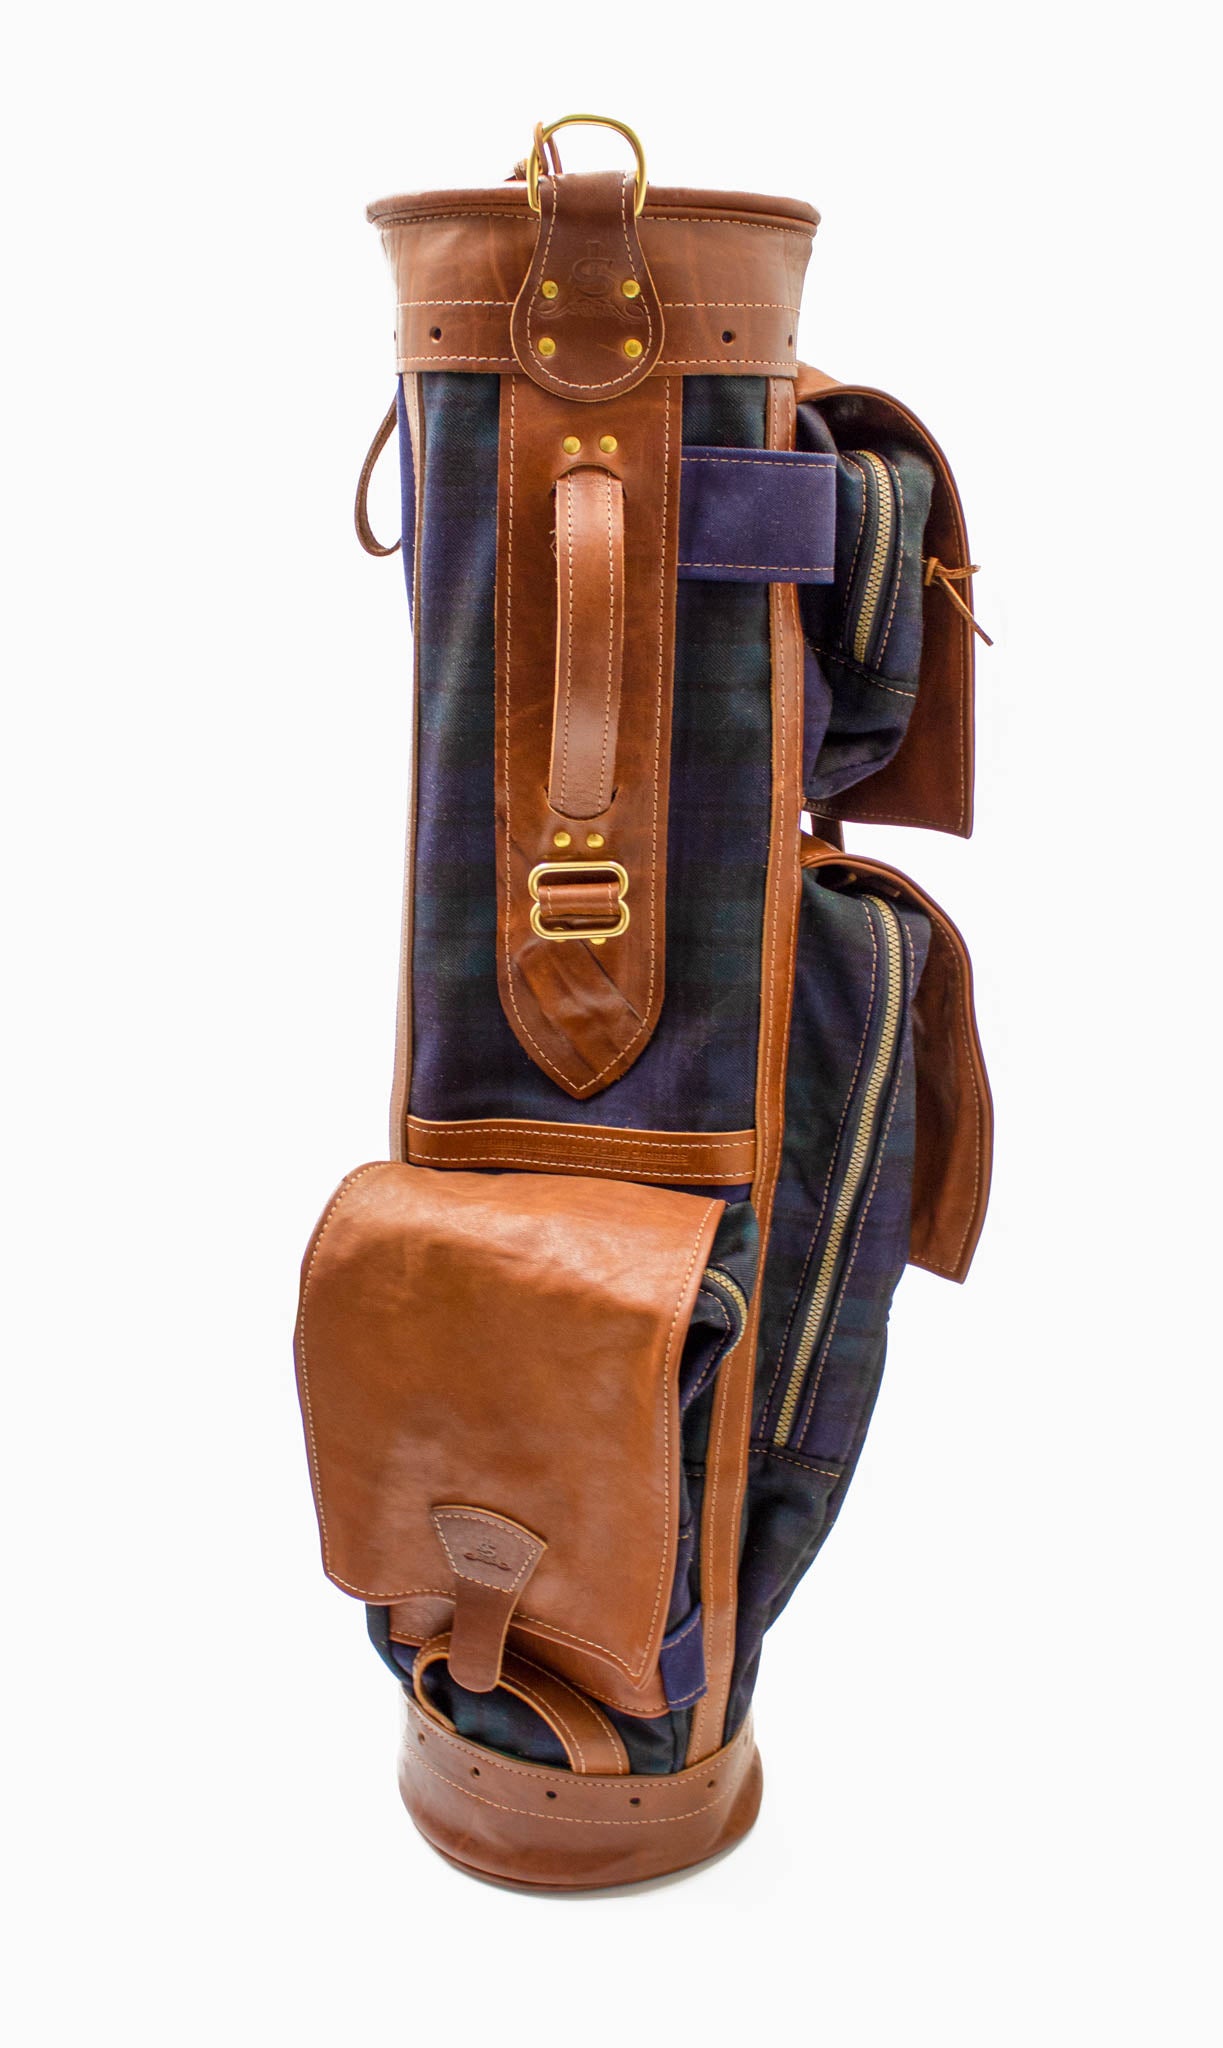 Gran Tour Style Golf Bags